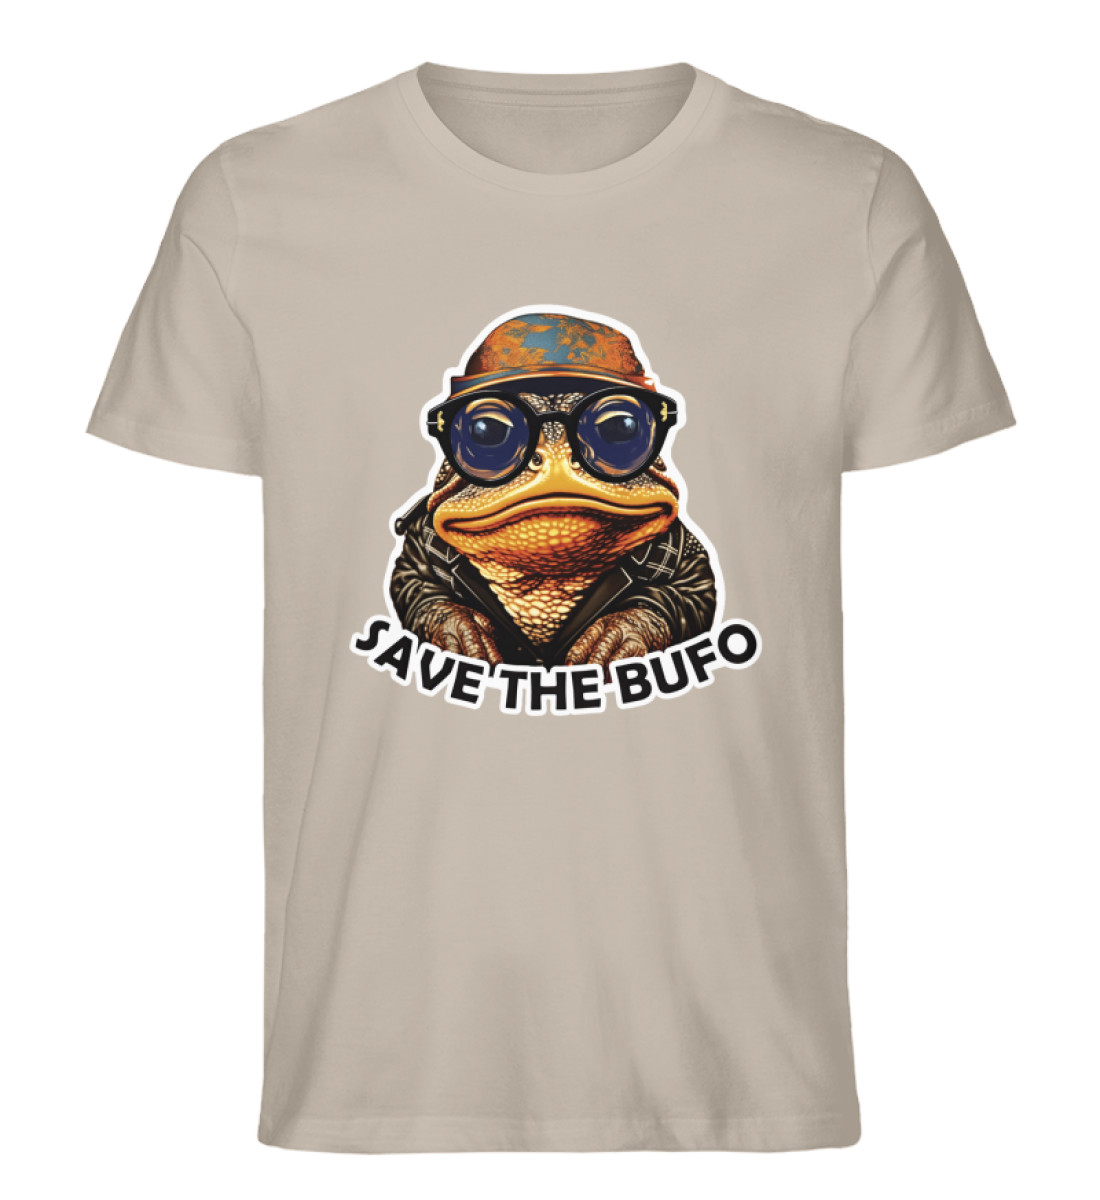 Save The Bufo! 5-MeO-DMT - Premium Organic T-Shirt - Men Premium Organic Shirt-7081